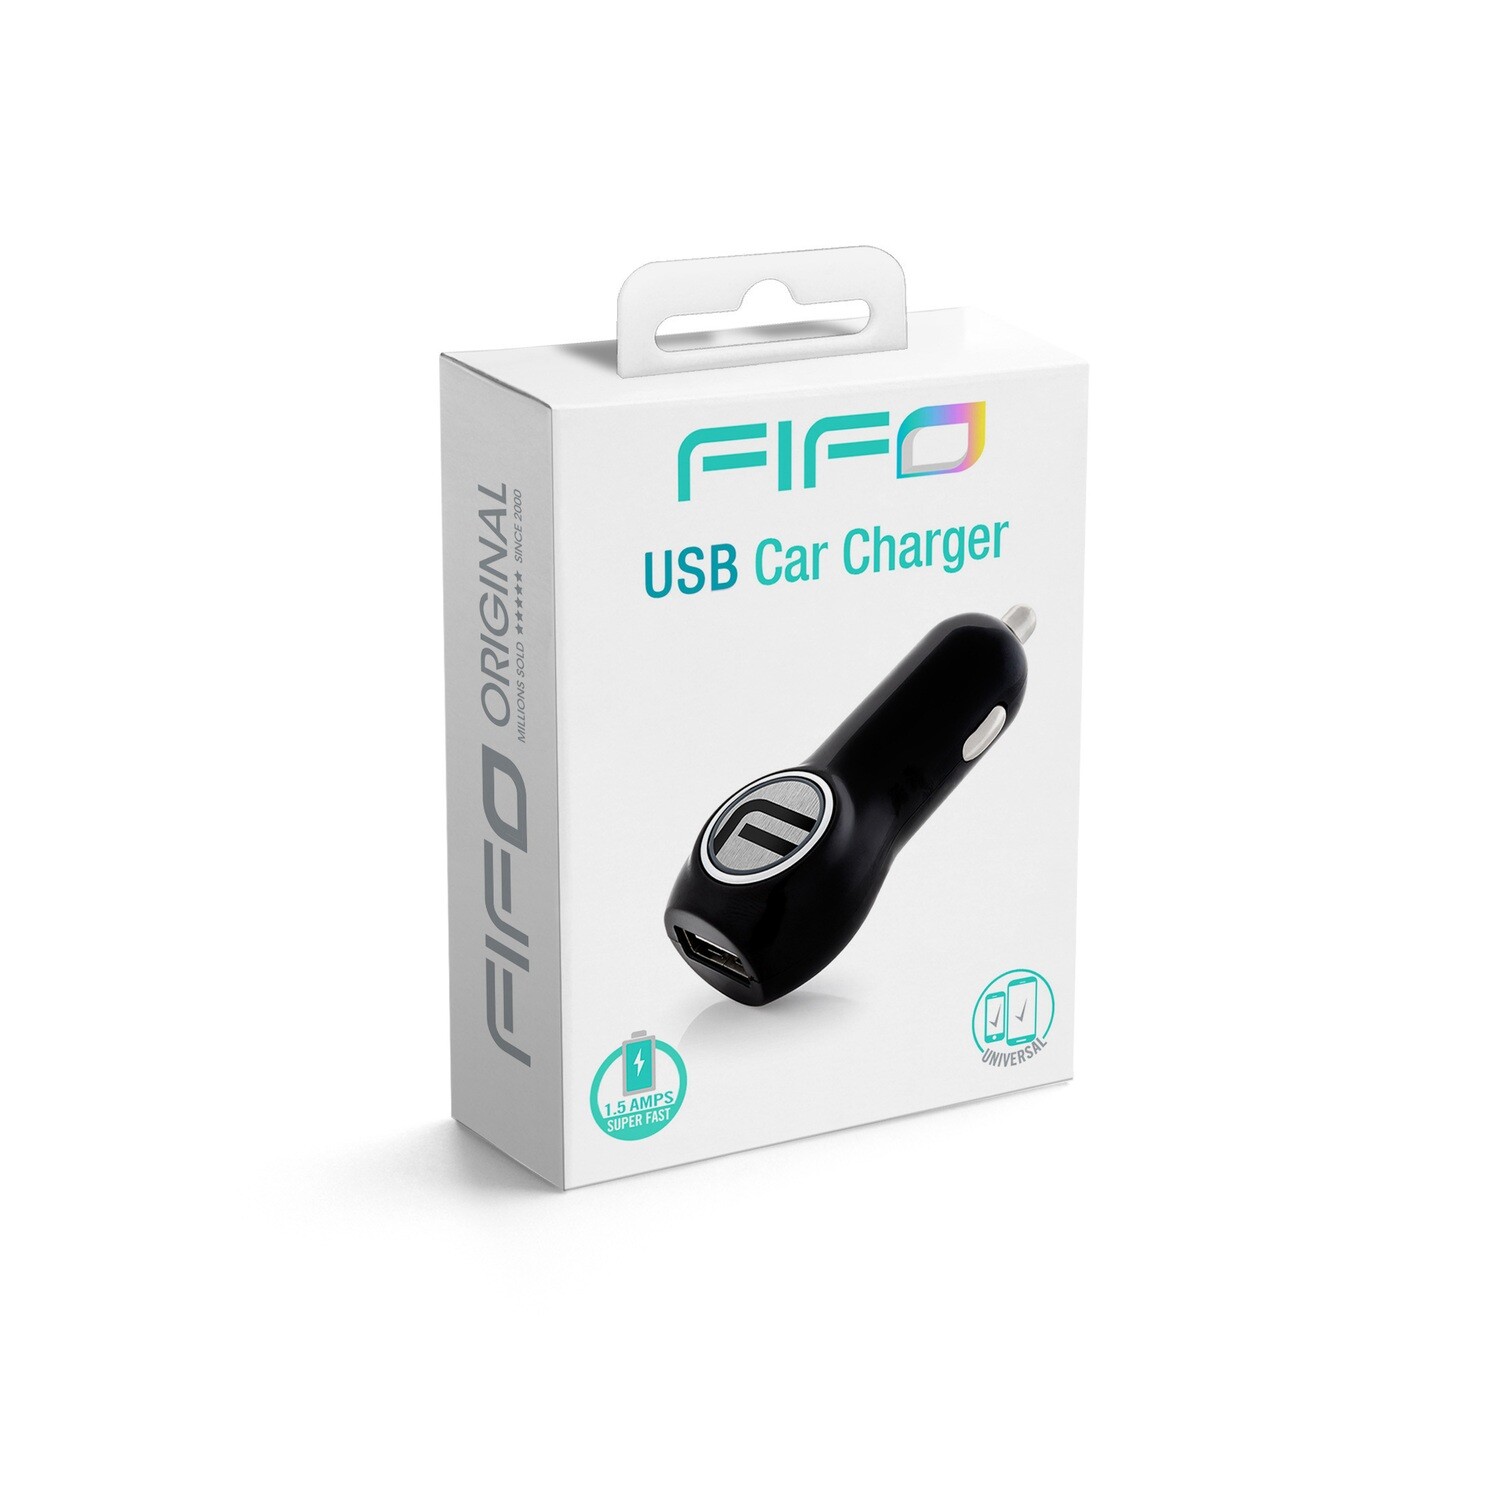 FIFO COLORS USB CAR CHARGER